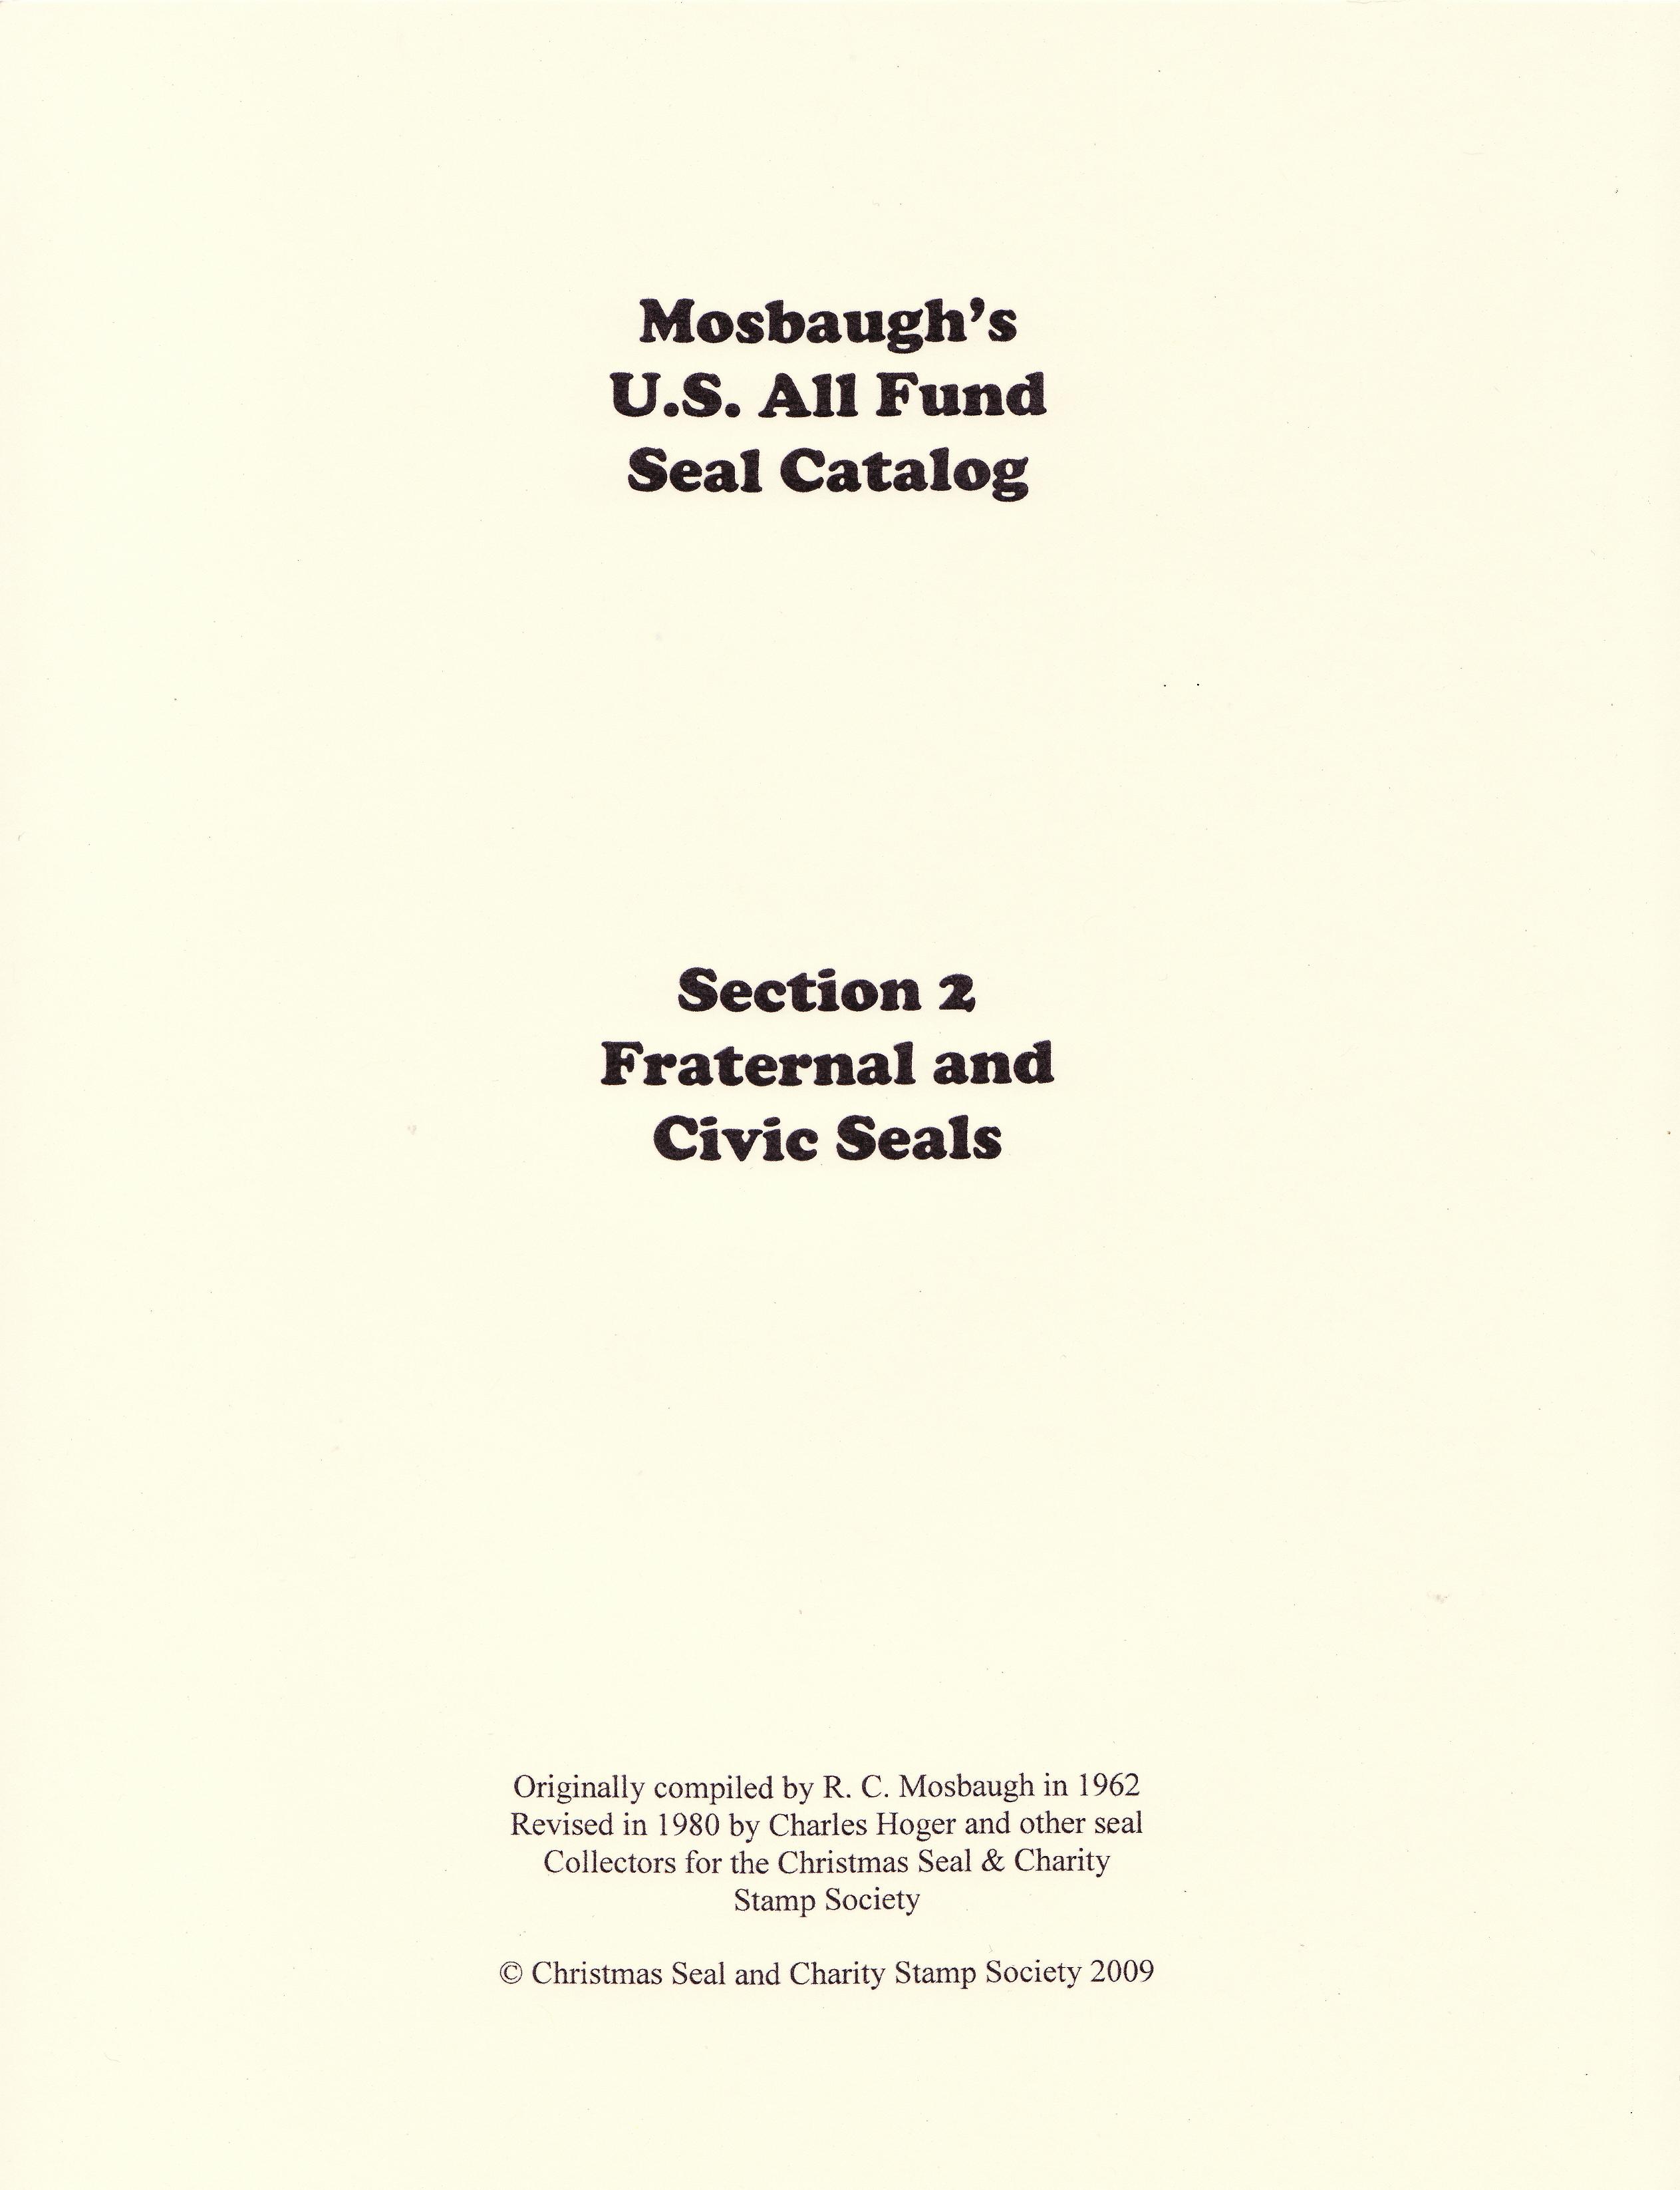 Mosbaugh's Catalog, Sec. 2, Fraternal & Civic Charity Seals, 1962 ed., Rev. 1980